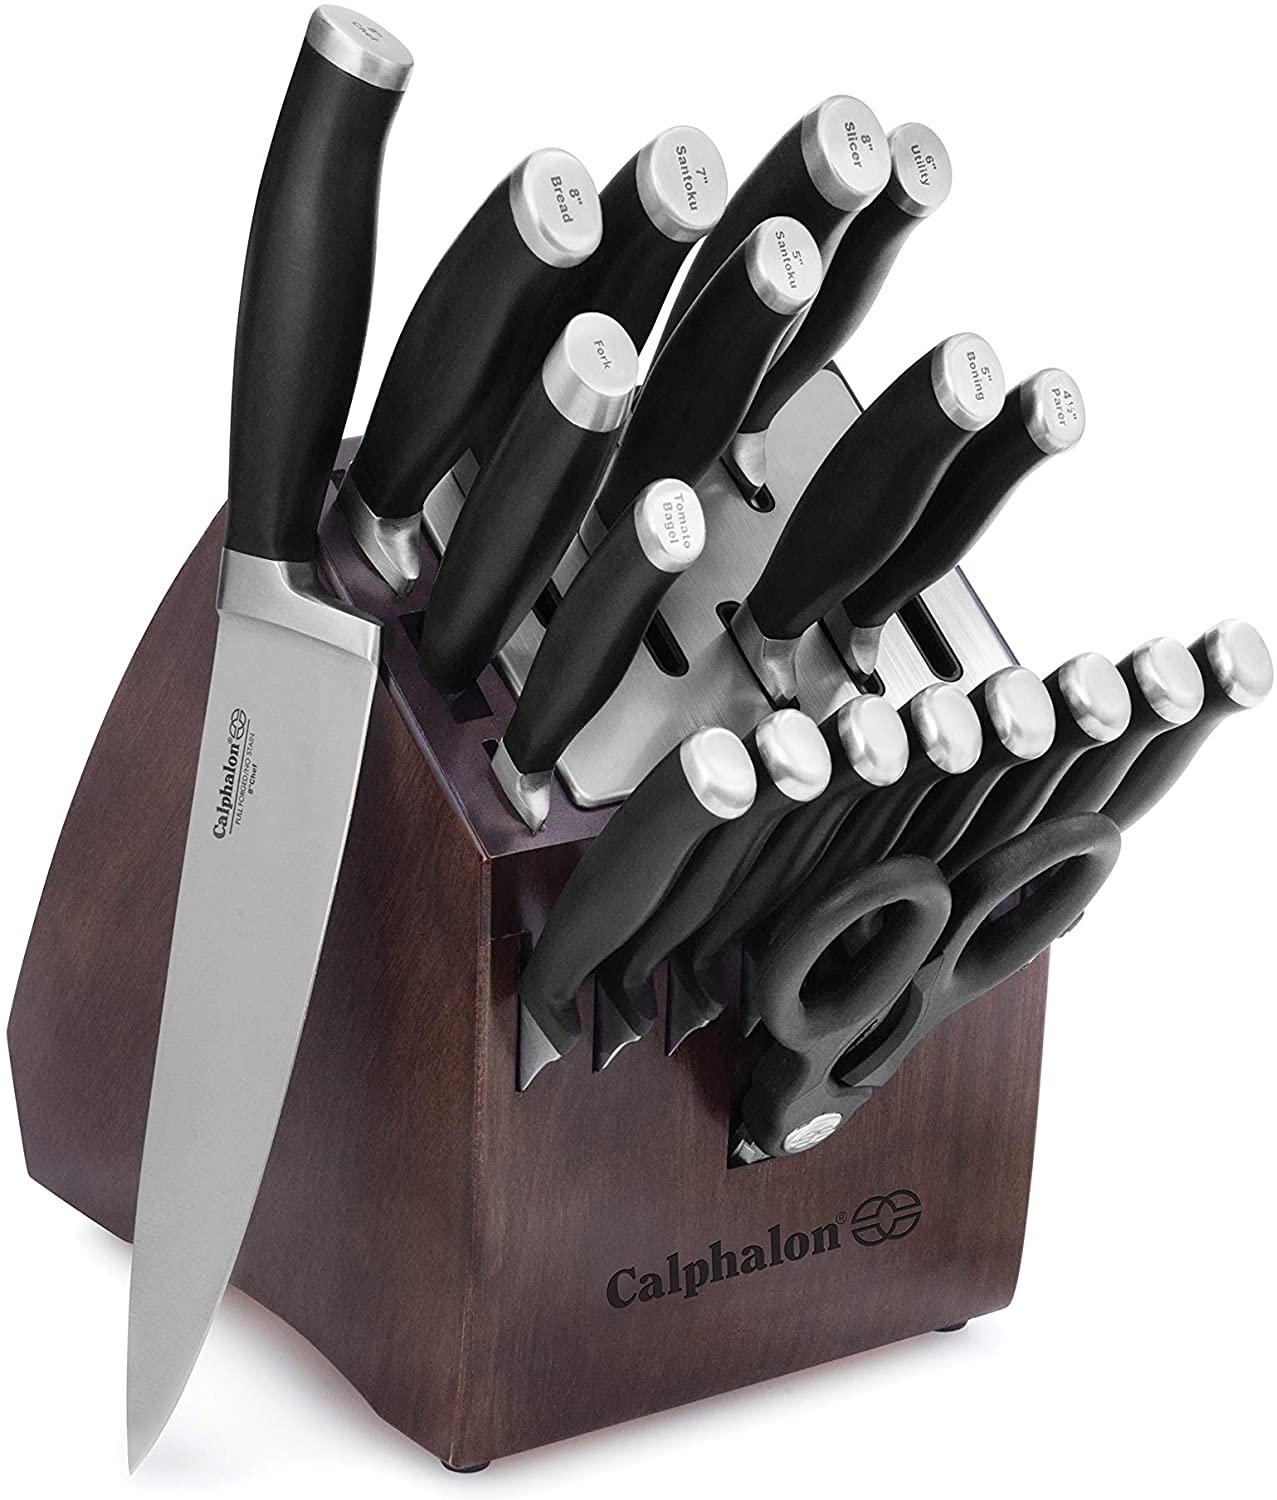 Calphalon Cutlery and Utensils